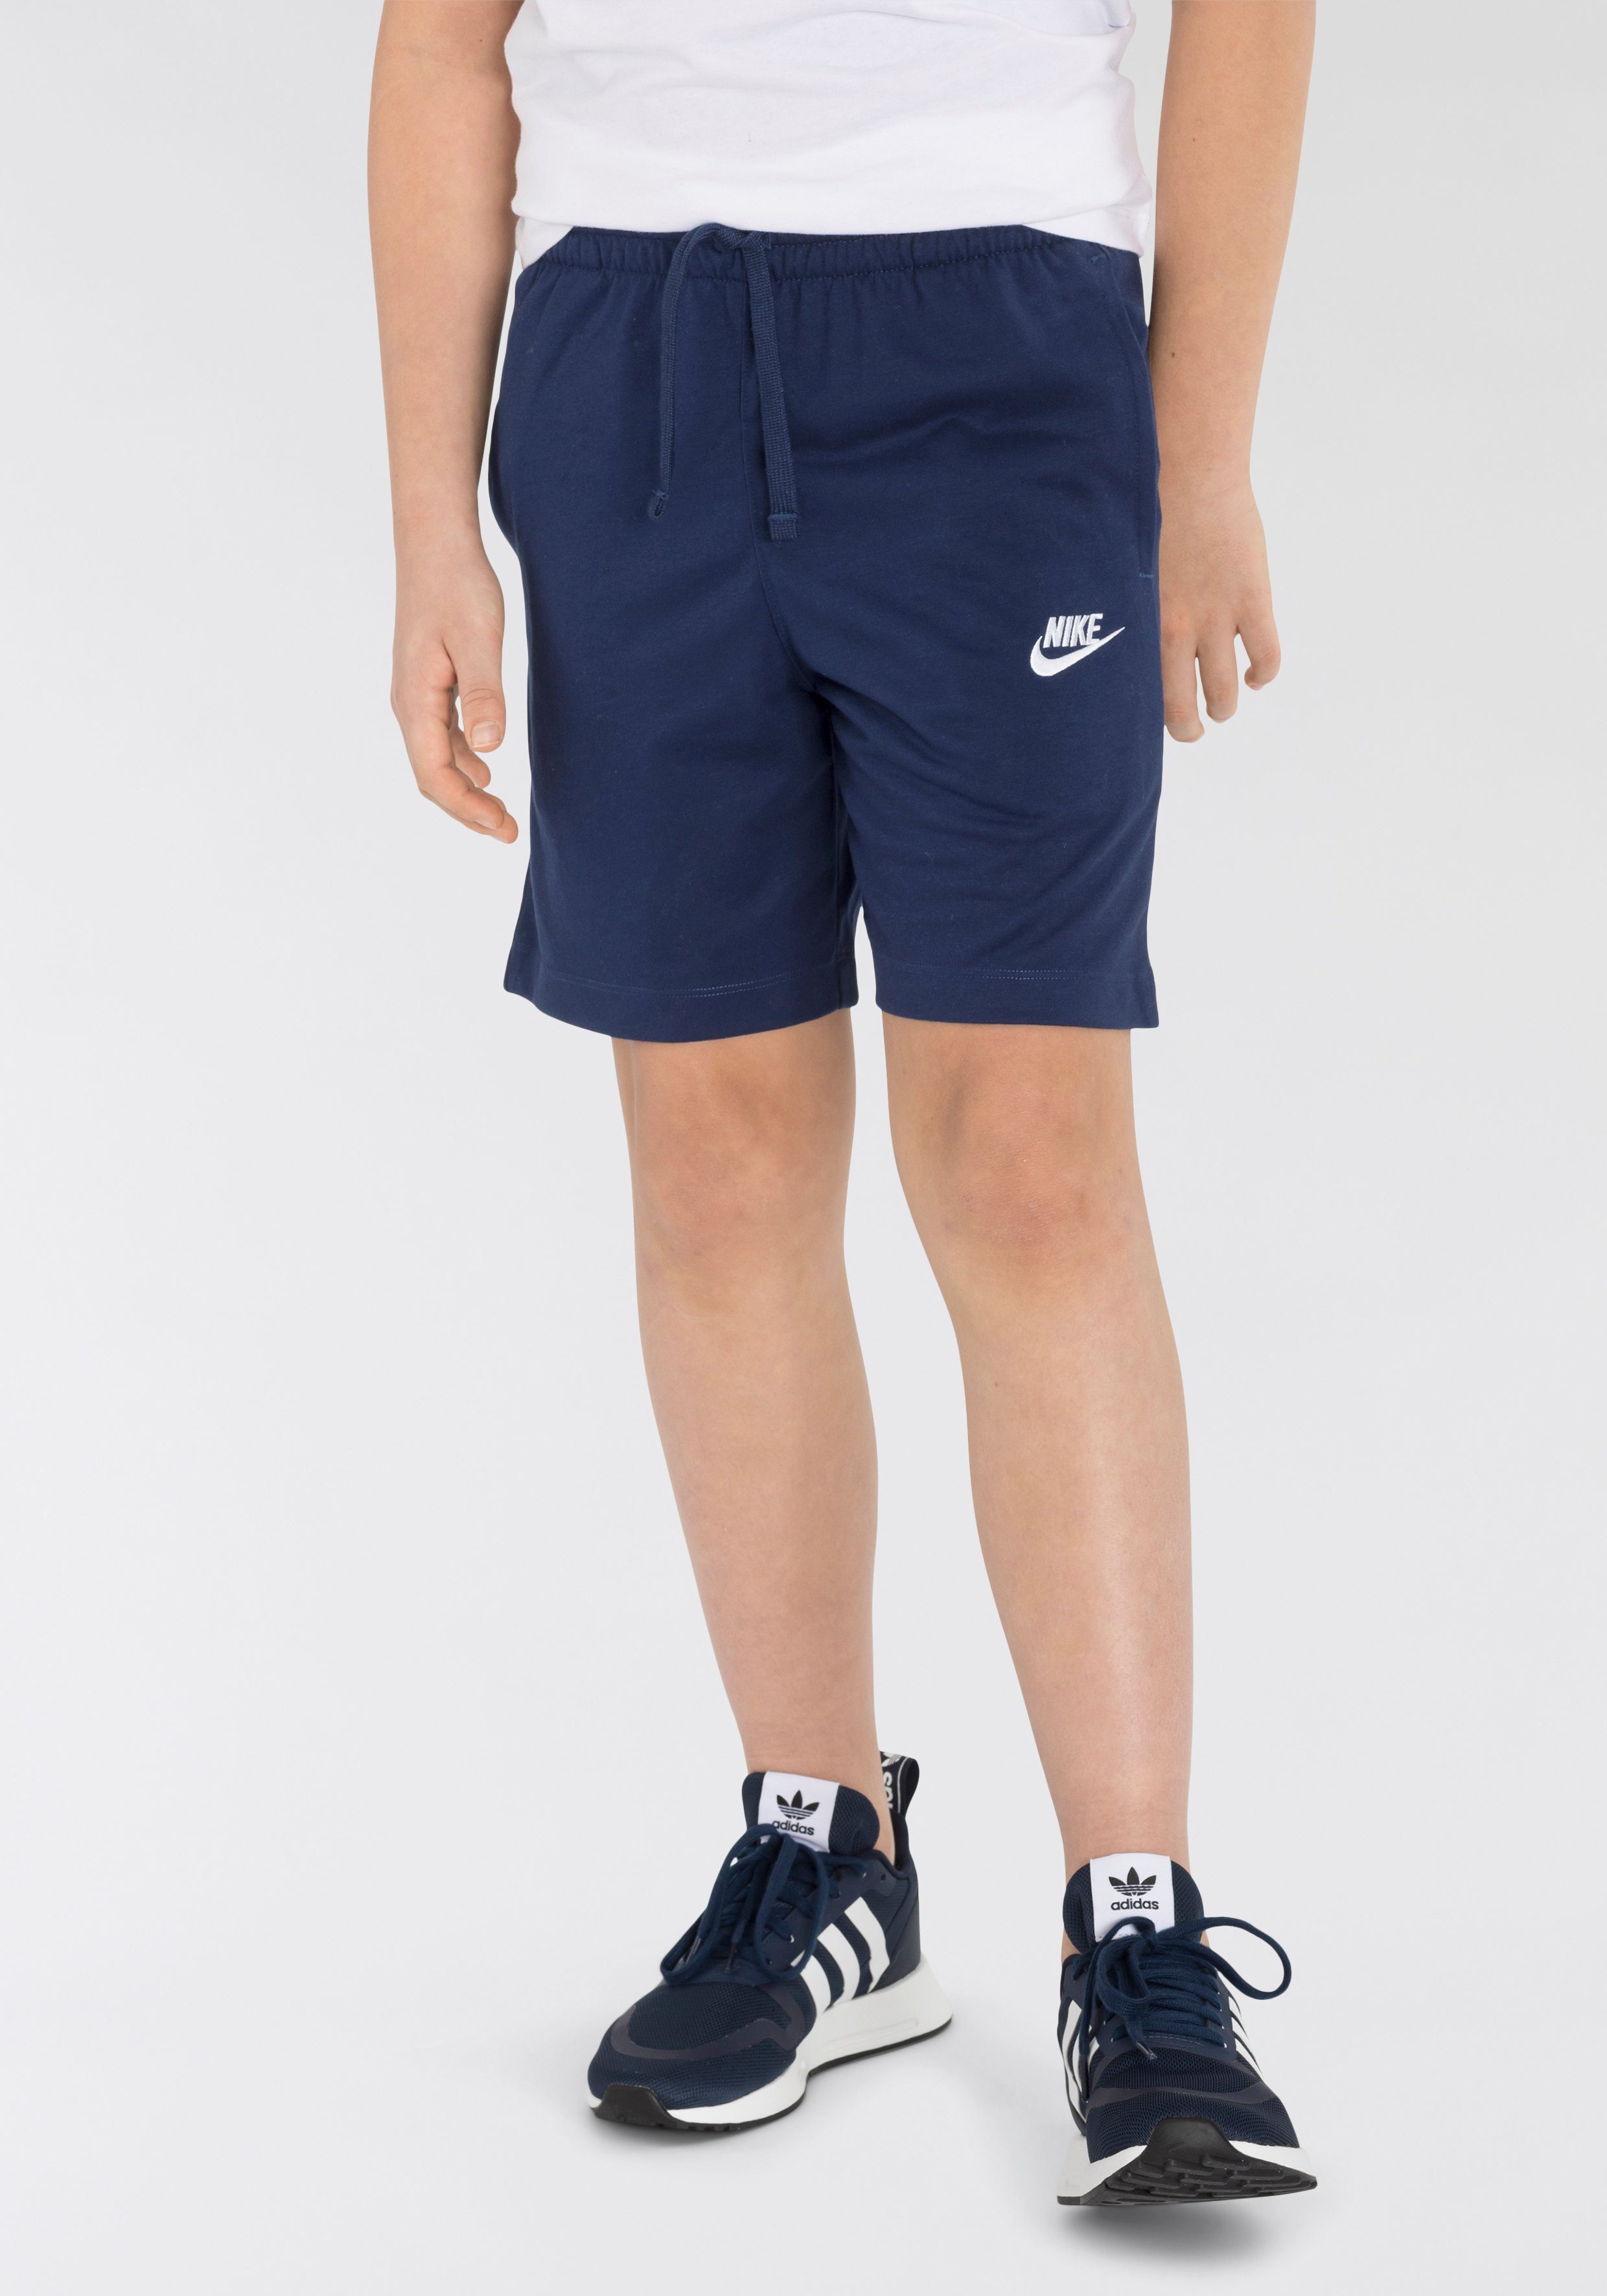 Nike KIDS' JERSEY (BOYS) Shorts Sportswear dunkelblau BIG SHORTS